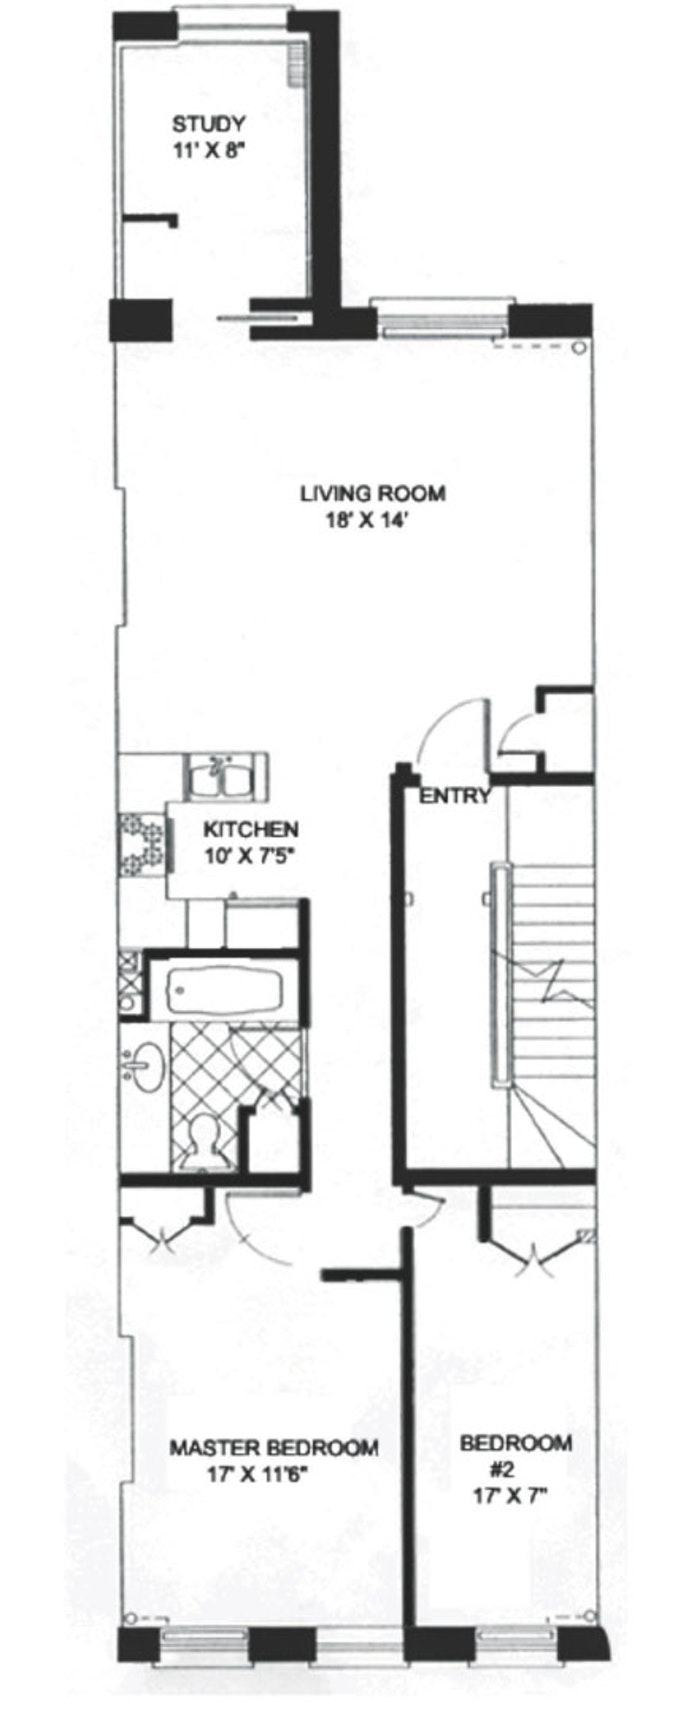 Floorplan for 155 West 78th Street, 2